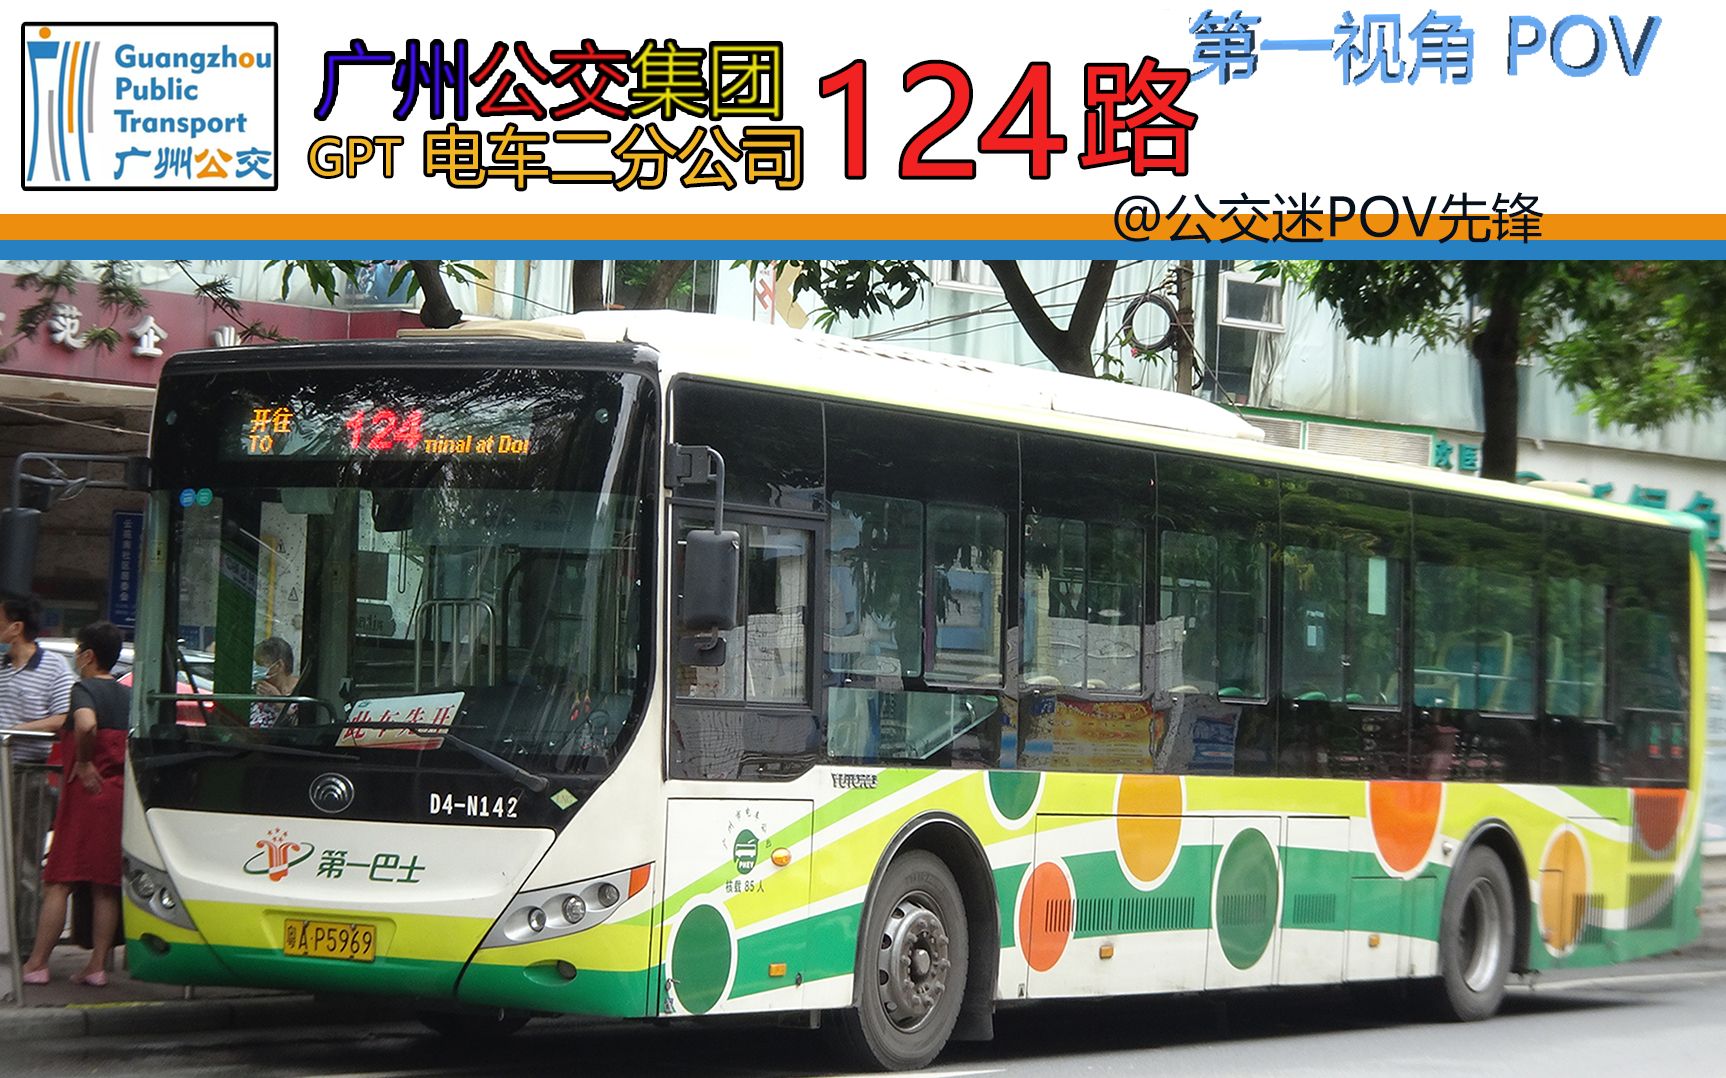 [gz082]【广州公交pov】广州公交集团 电车二分公司 124路 滘口客运站